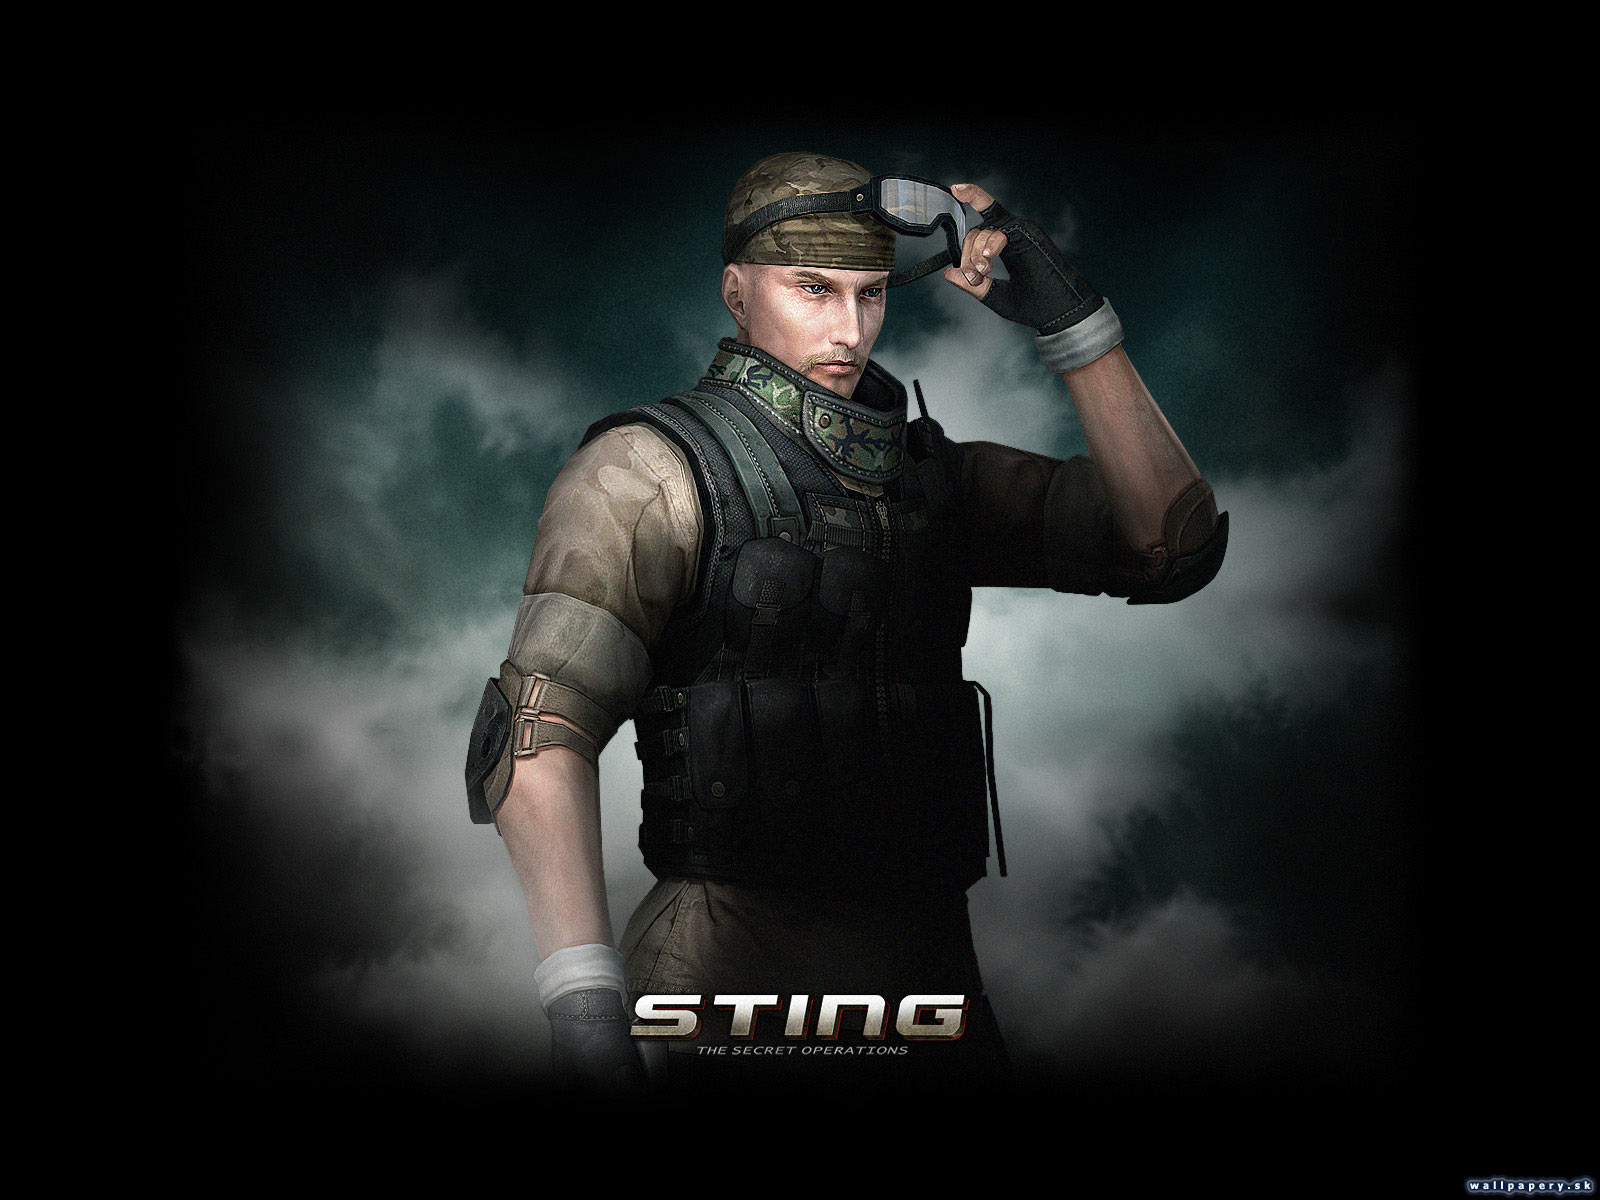 Sting: The Secret Operations - wallpaper 5